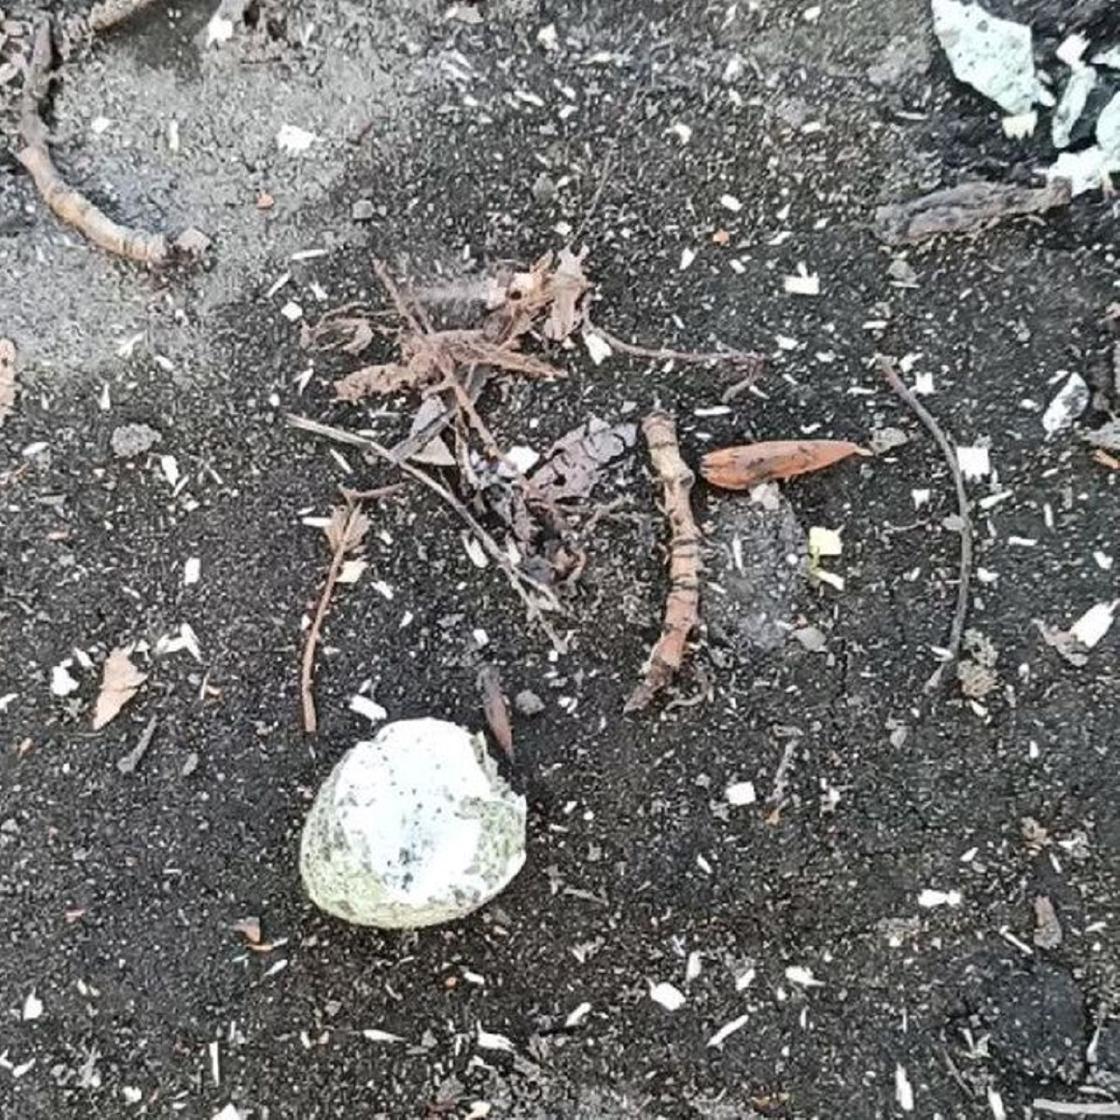 Разбитое яйцо лежит на земле